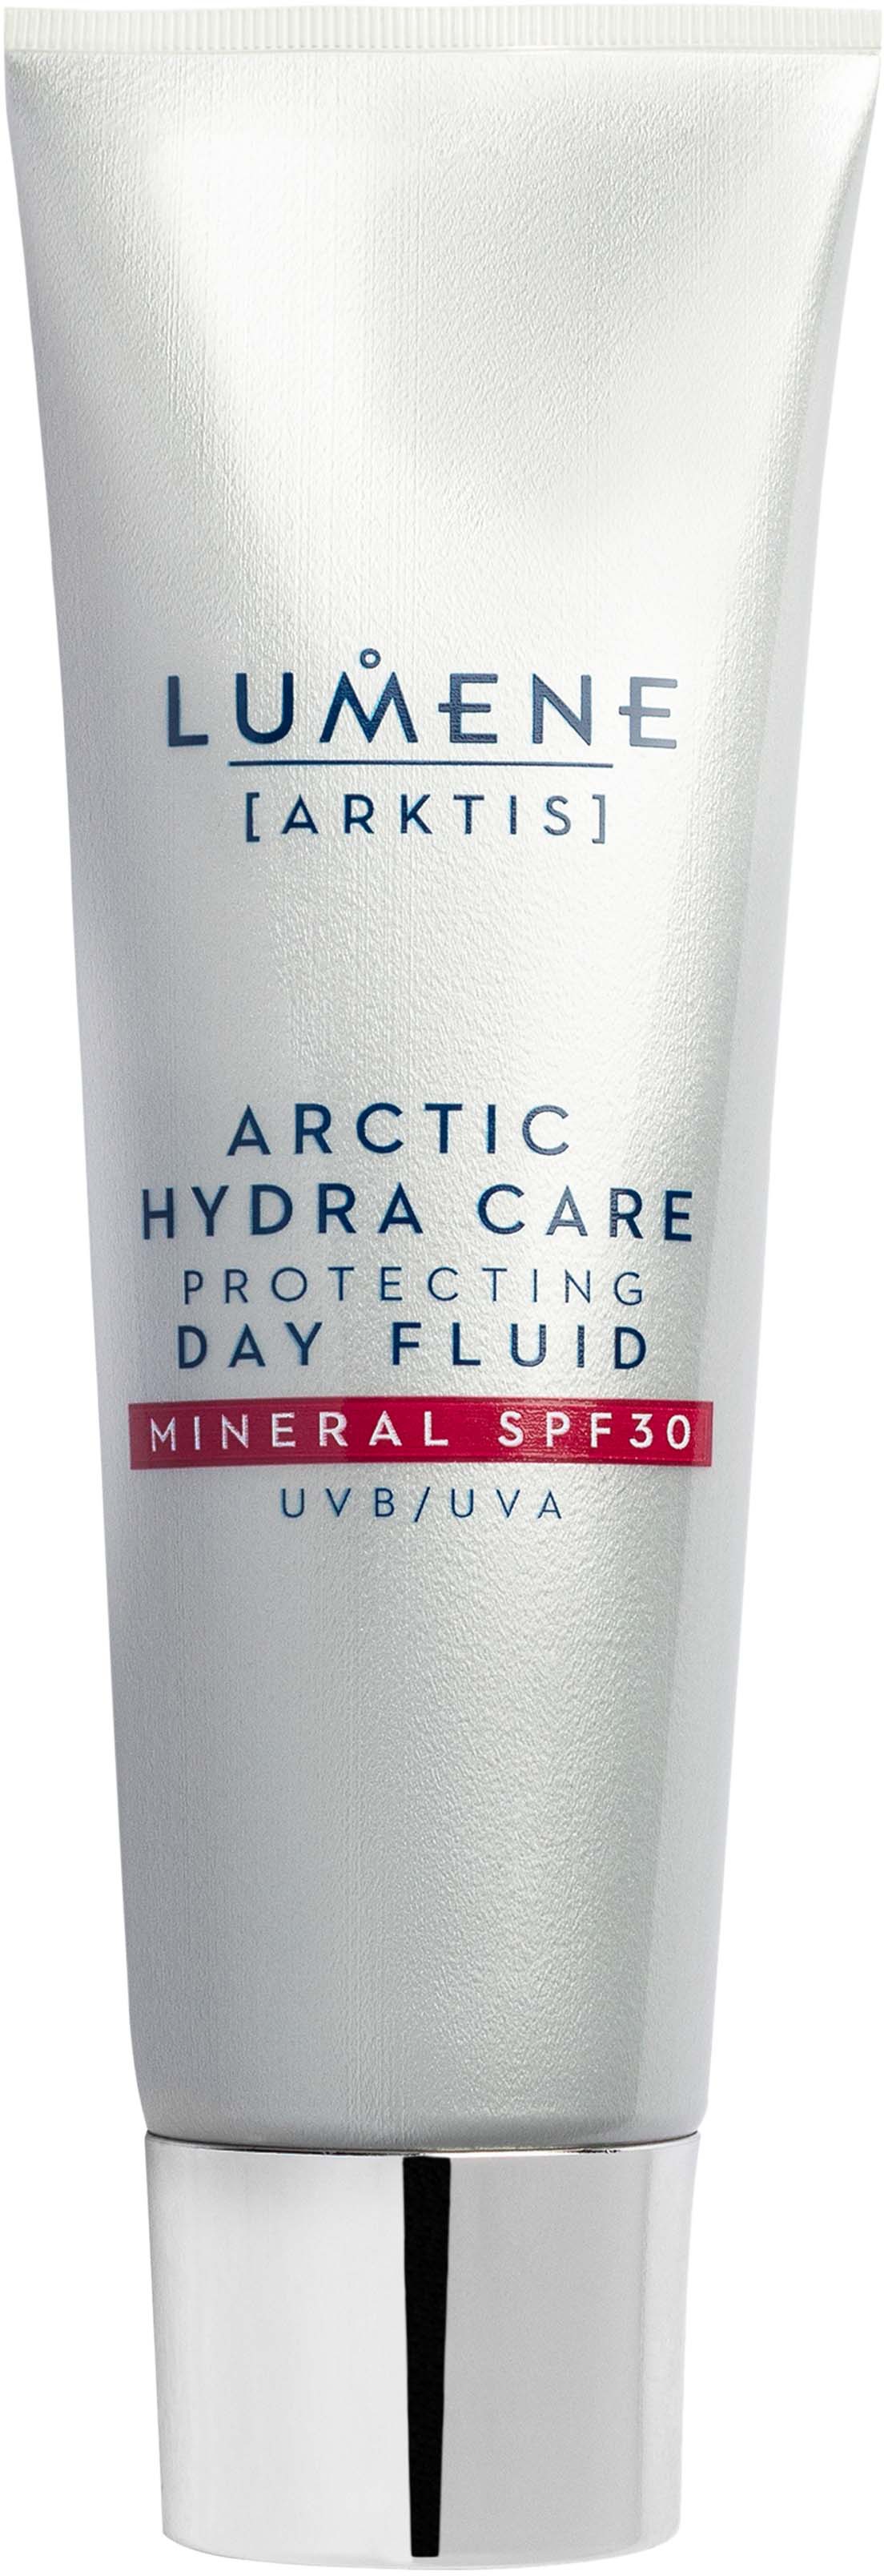 Lumene Arctic Hydra Care Protecting Day Fluid Mineral SPF 30